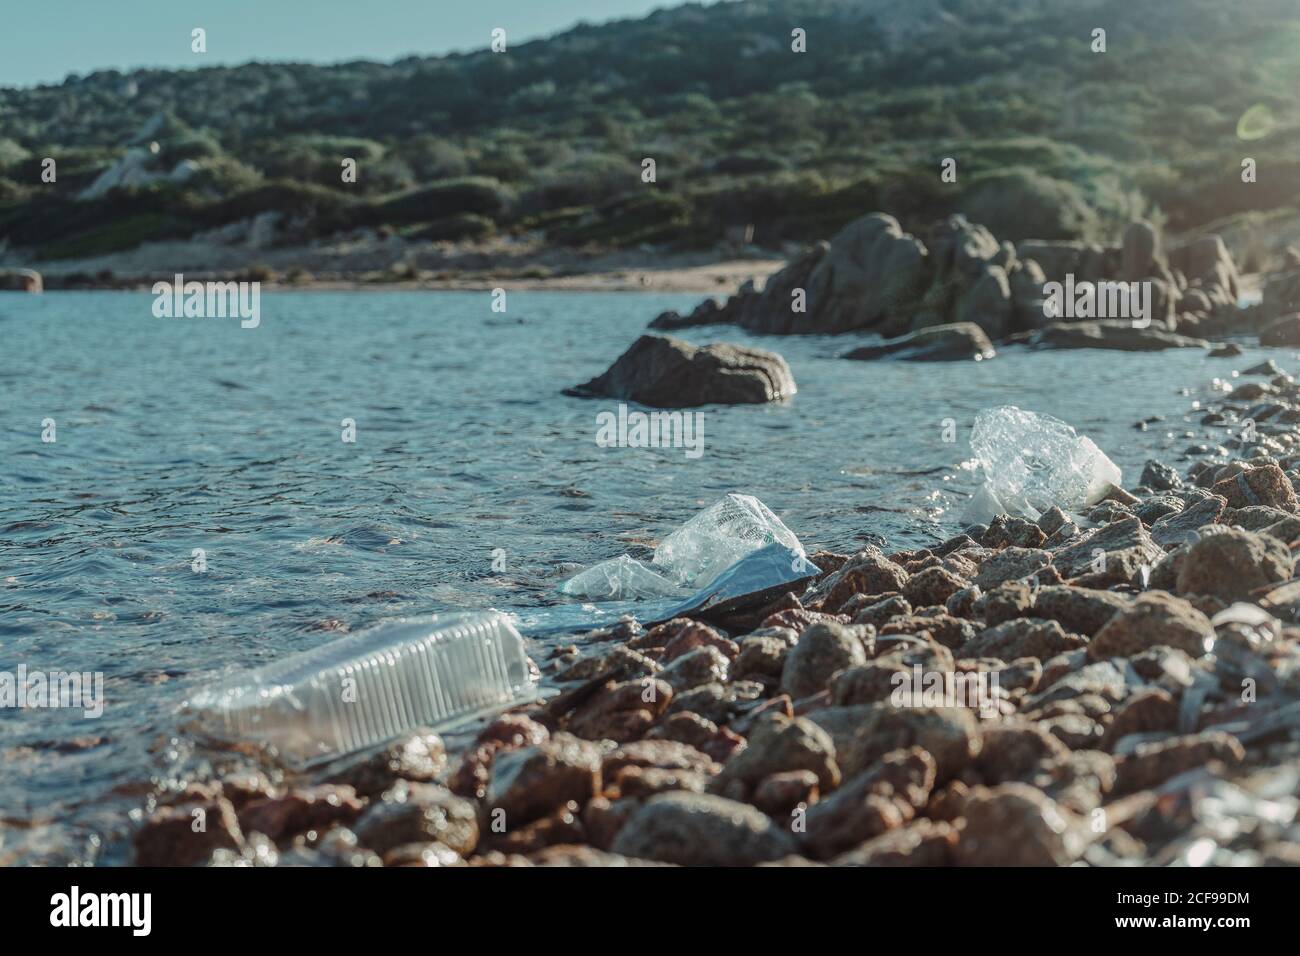 Empty plastic crumpled bottles waste lying on the seaside rock near clear water Stock Photo